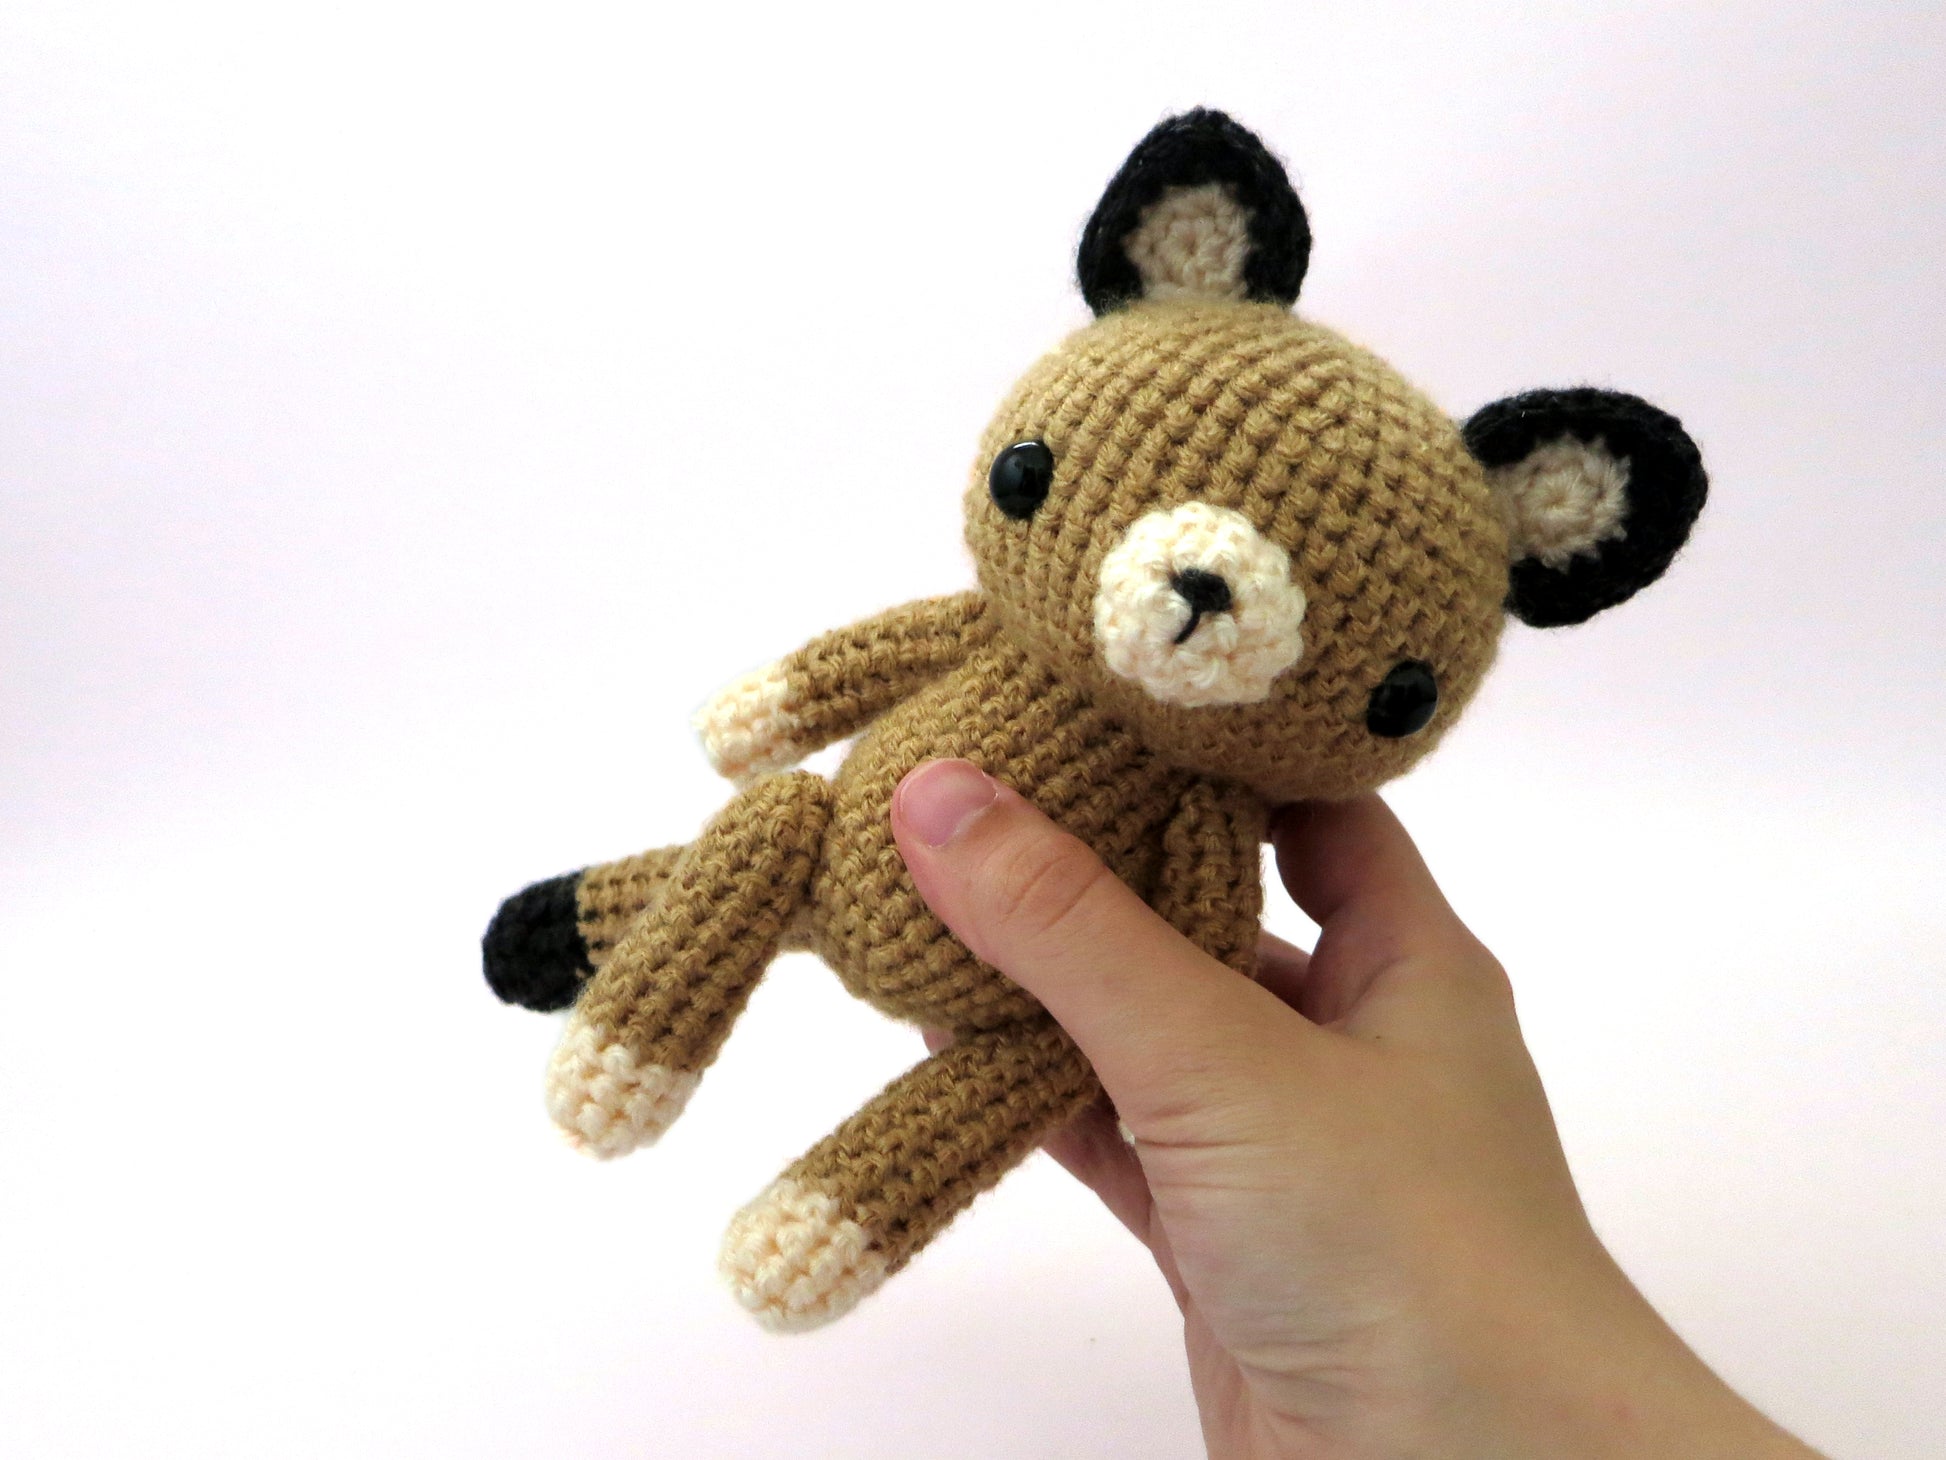 amigurumi crochet cougar pattern in hand for size comparison